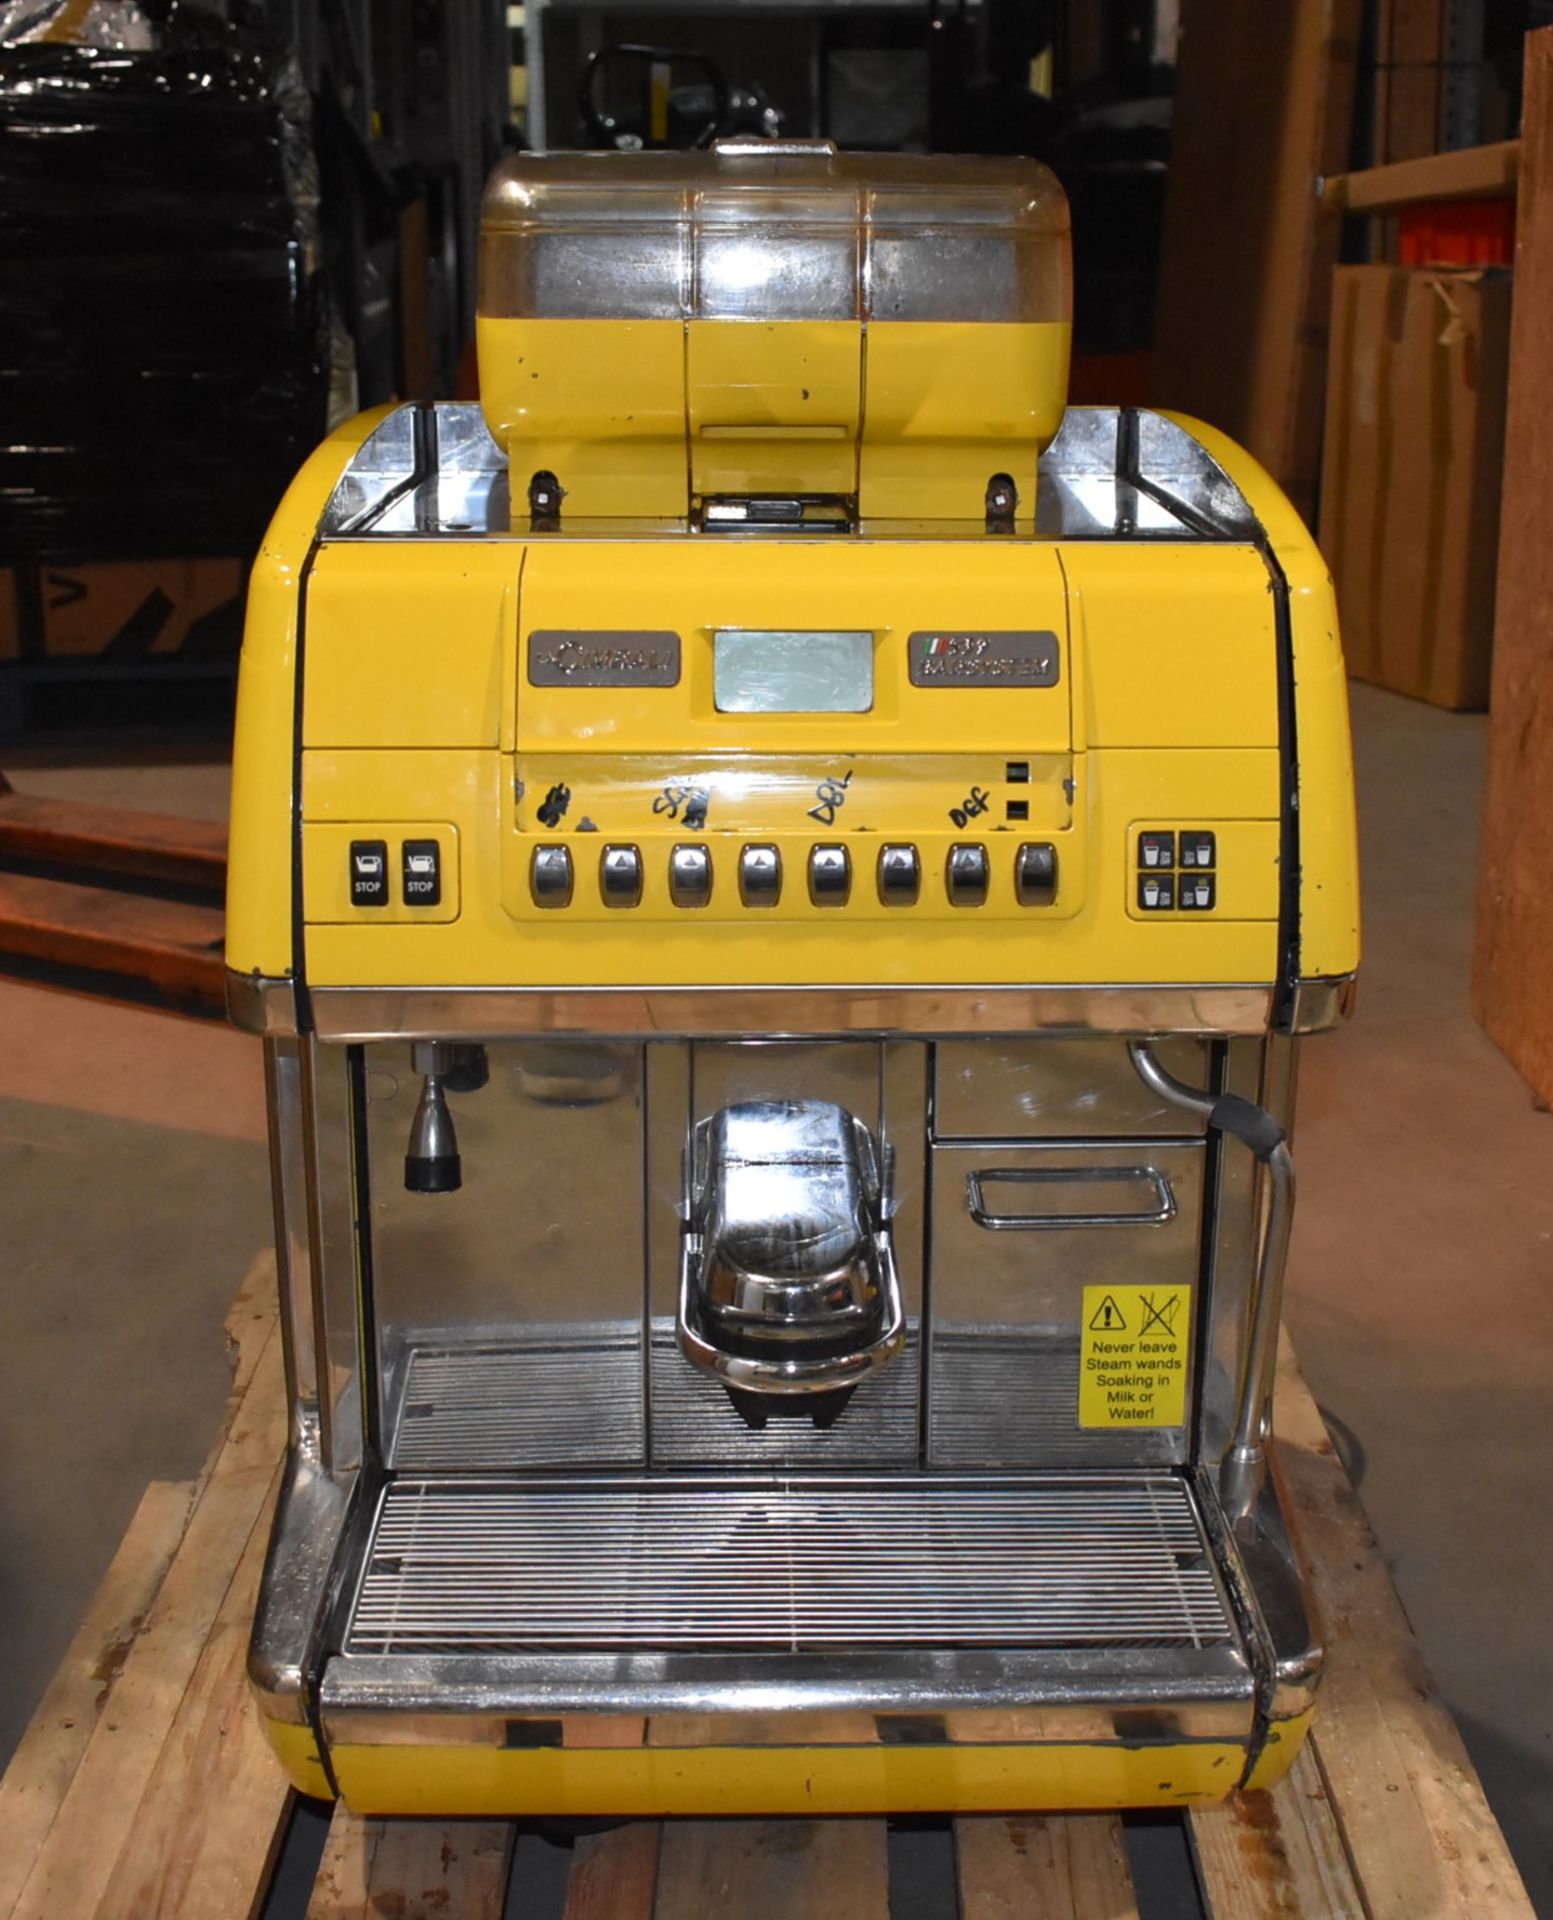 1 x La Cimbali S39 Barsystem Espresso Bean to Cup Coffee Machine - Bright Yellow Finish - 240V Plug - Image 14 of 14